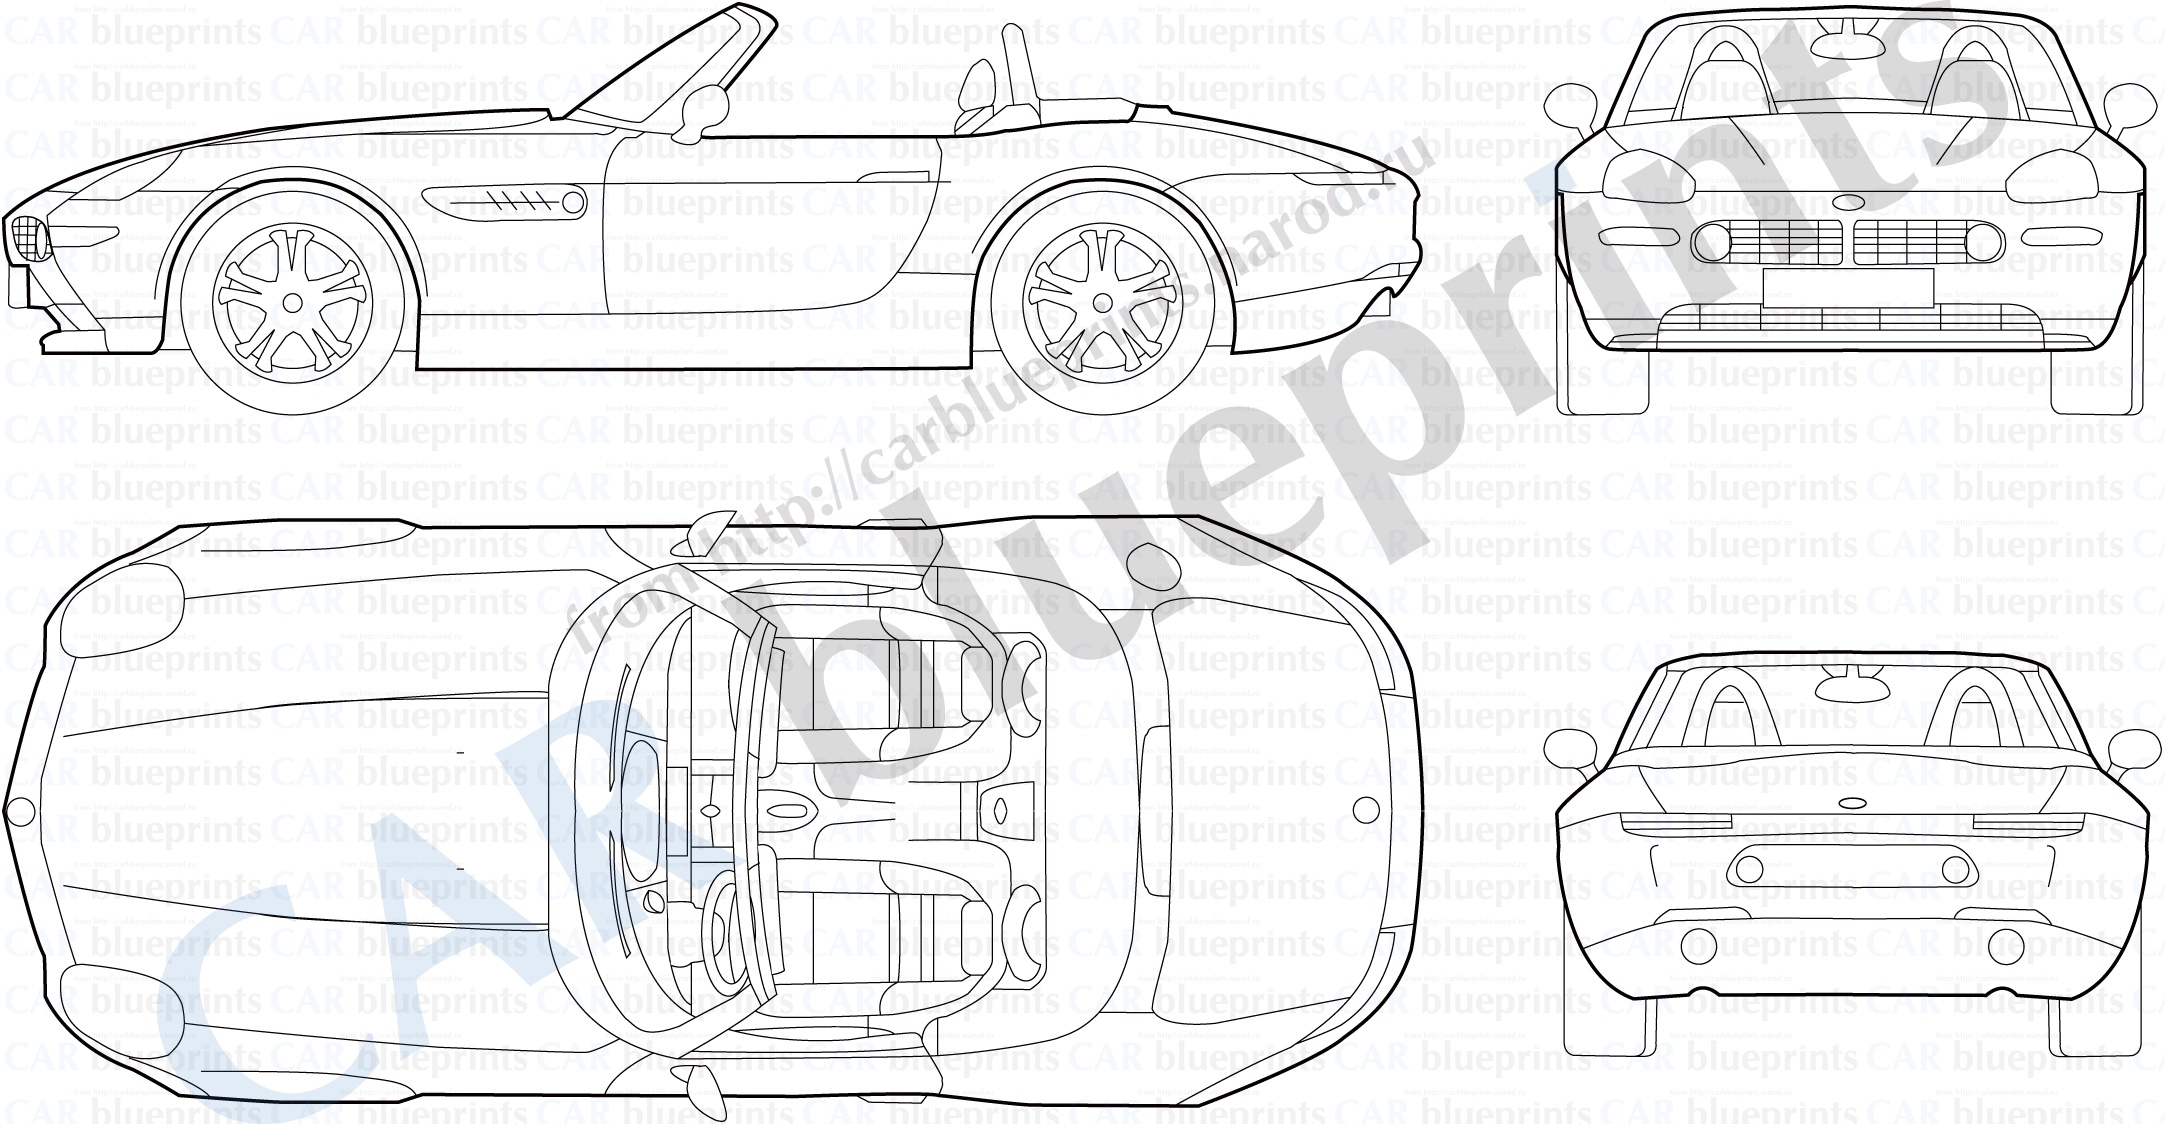 BMW Z4 (E89) (2013) Blueprints Vector Drawing 2000 bmw z8 e52 cabriolet
blueprints free